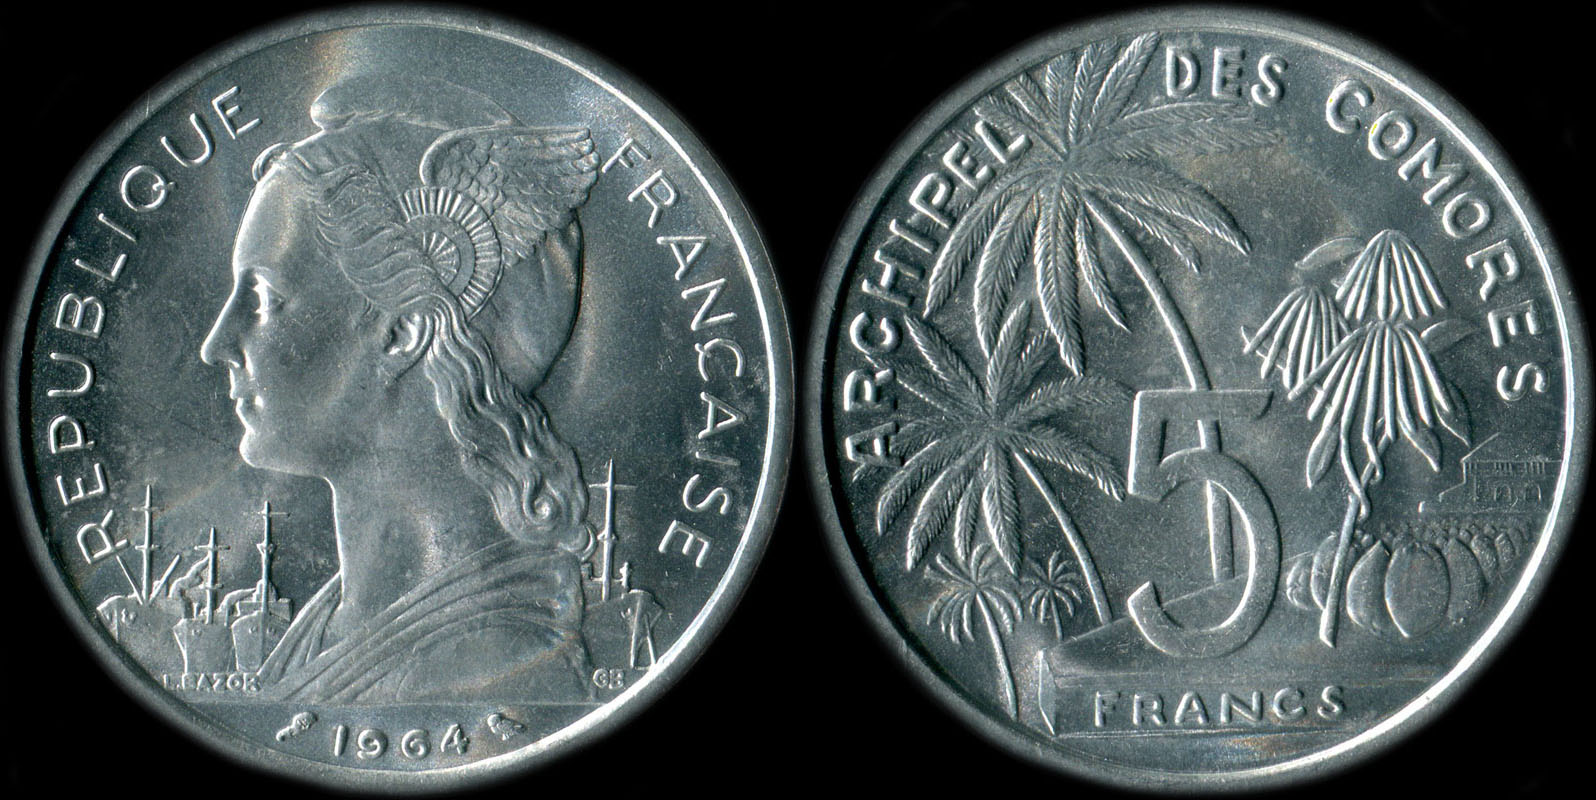 Pice de 5 francs 1964 Archipel des Comores